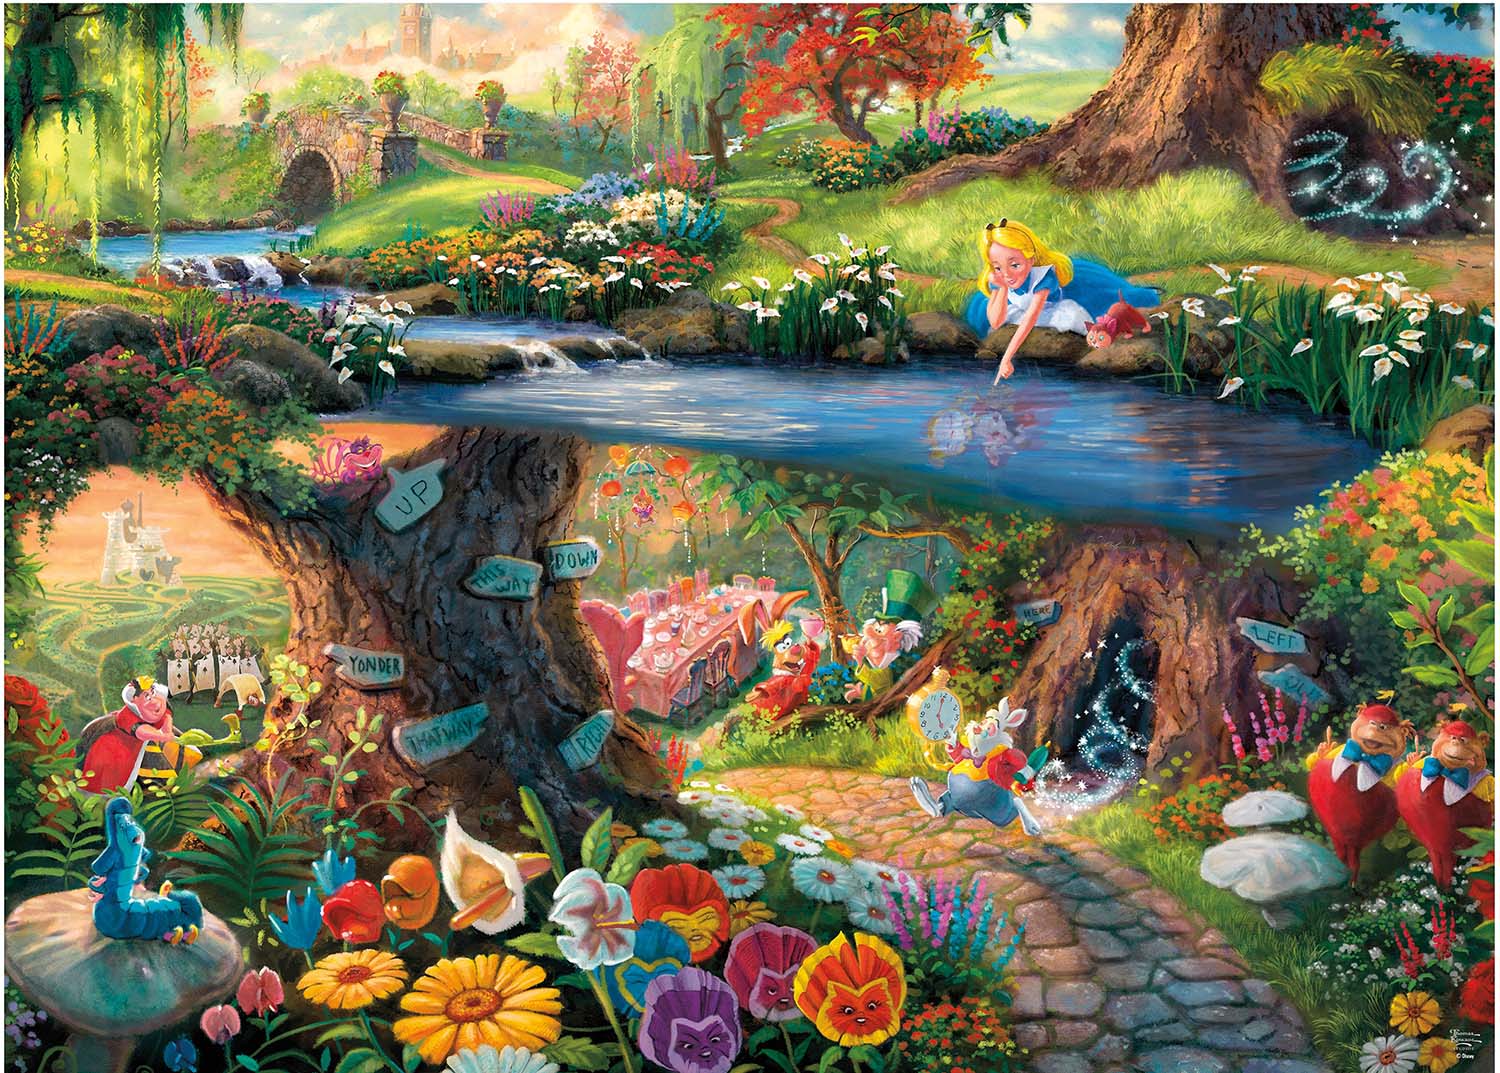 Alice In Wonderland Disney Jigsaw Puzzle